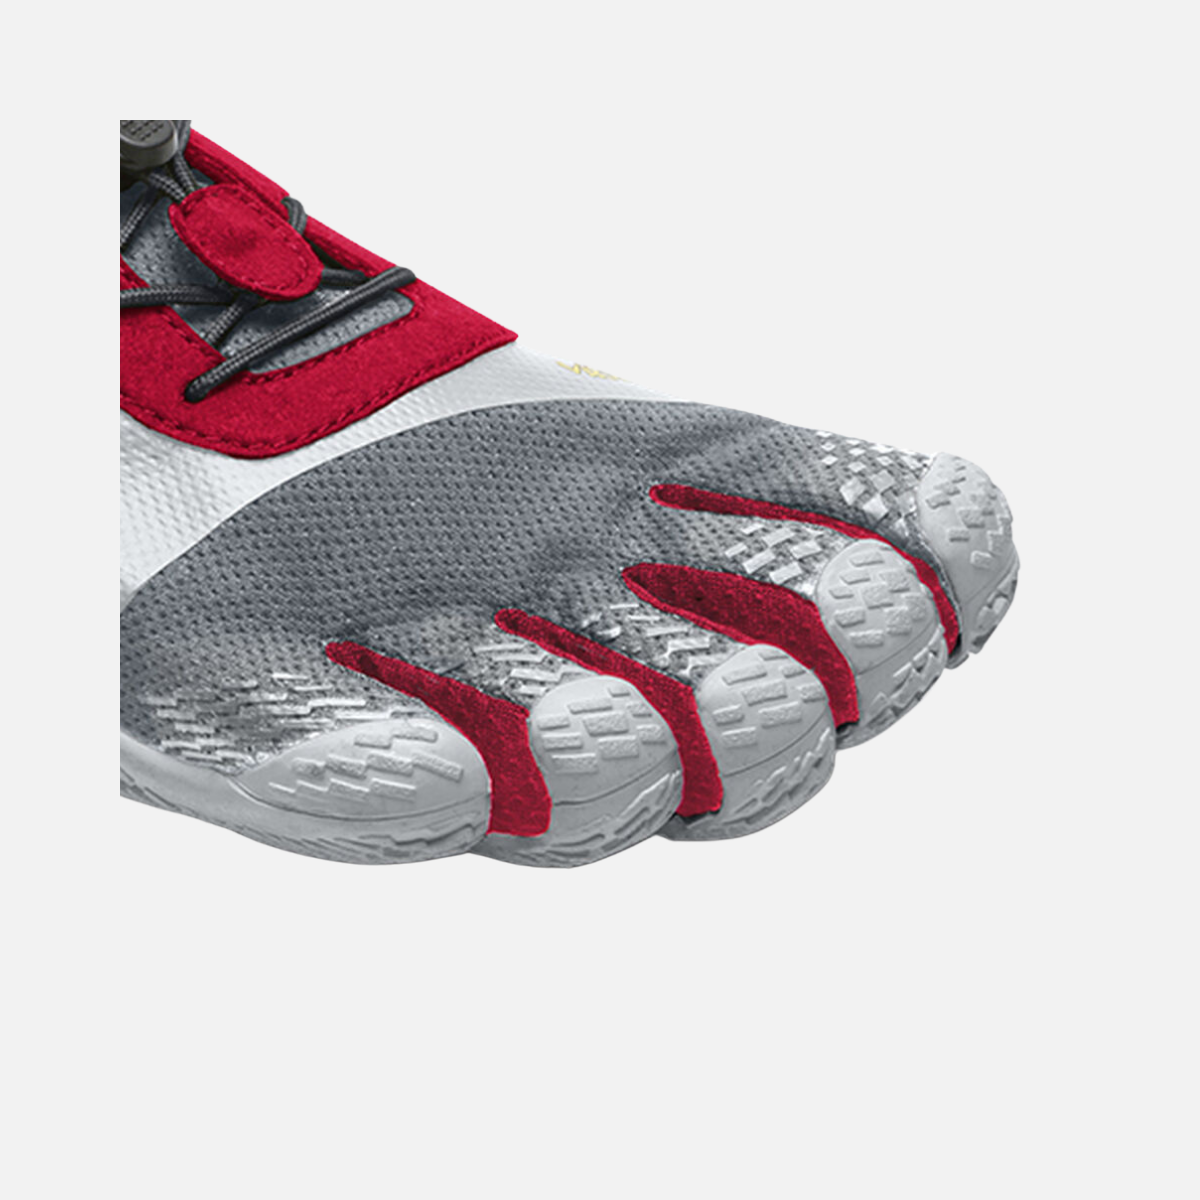 Vibram Kso Evo Mens Barefoot Training Footwear (Grey-Red)